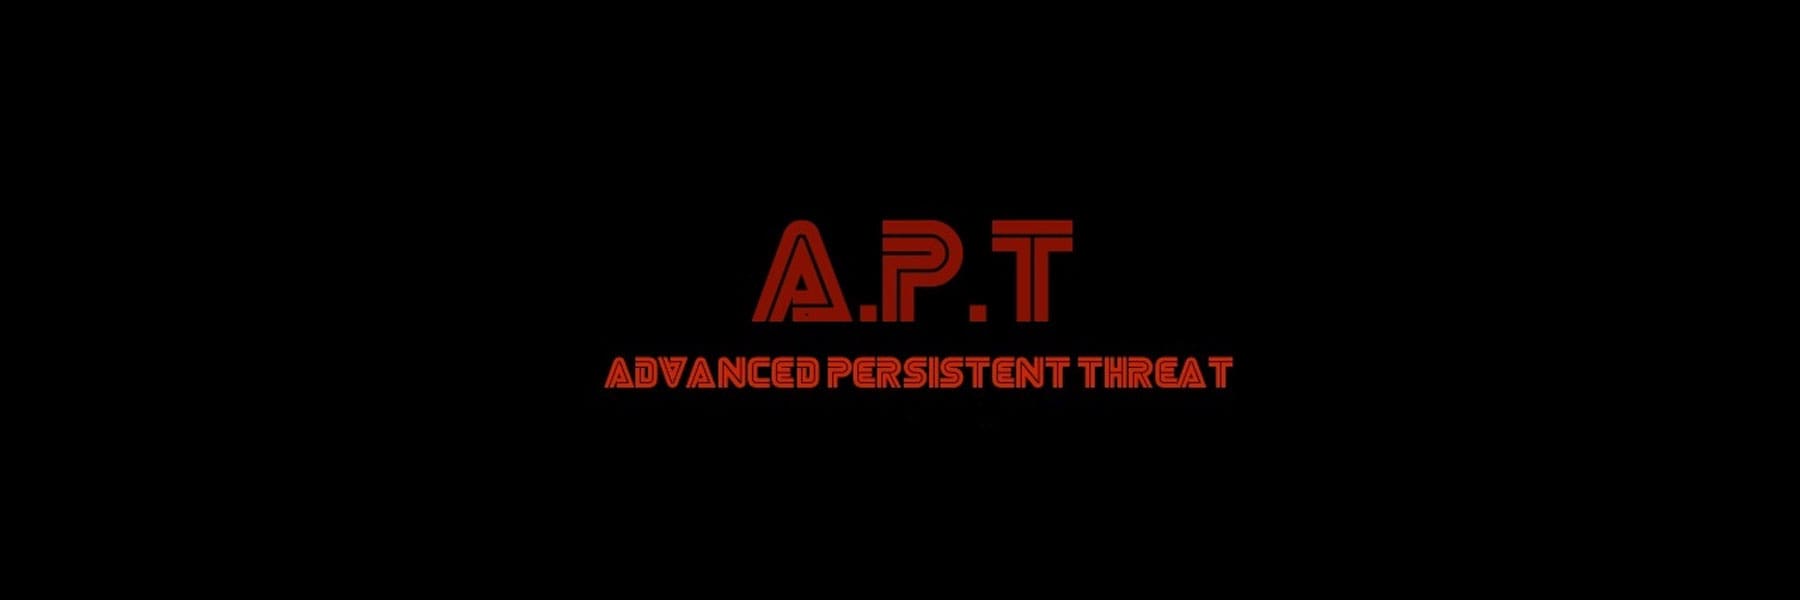 Advanced Persistent Threat (APT) - Blog Post Banner SafeAeon